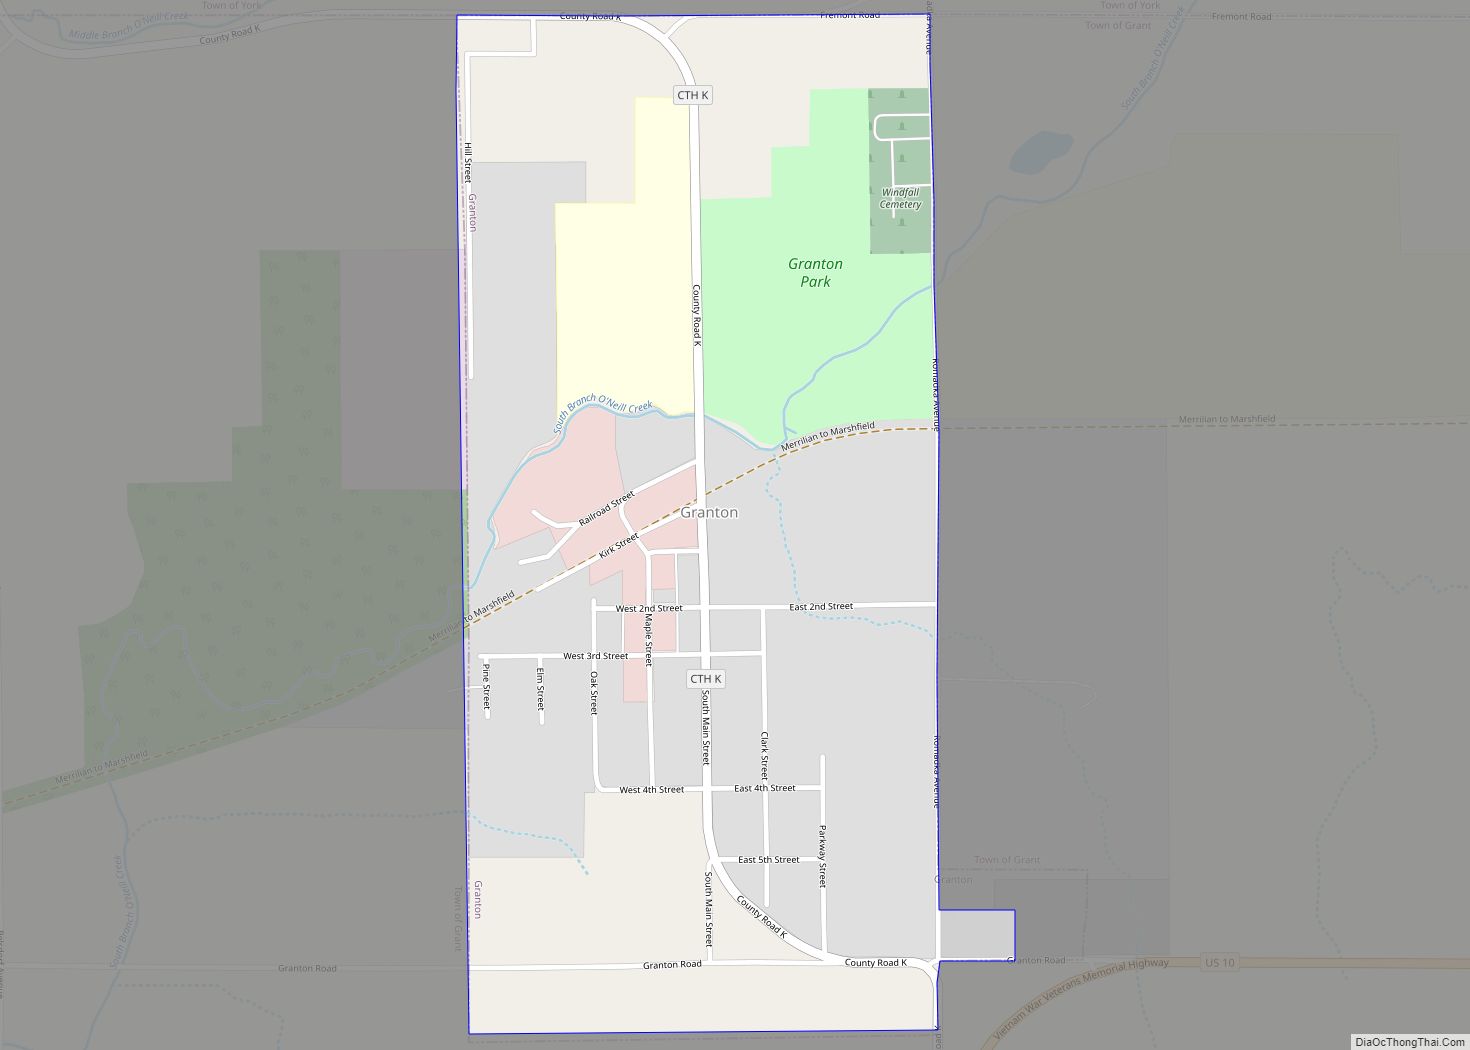 Map of Granton village